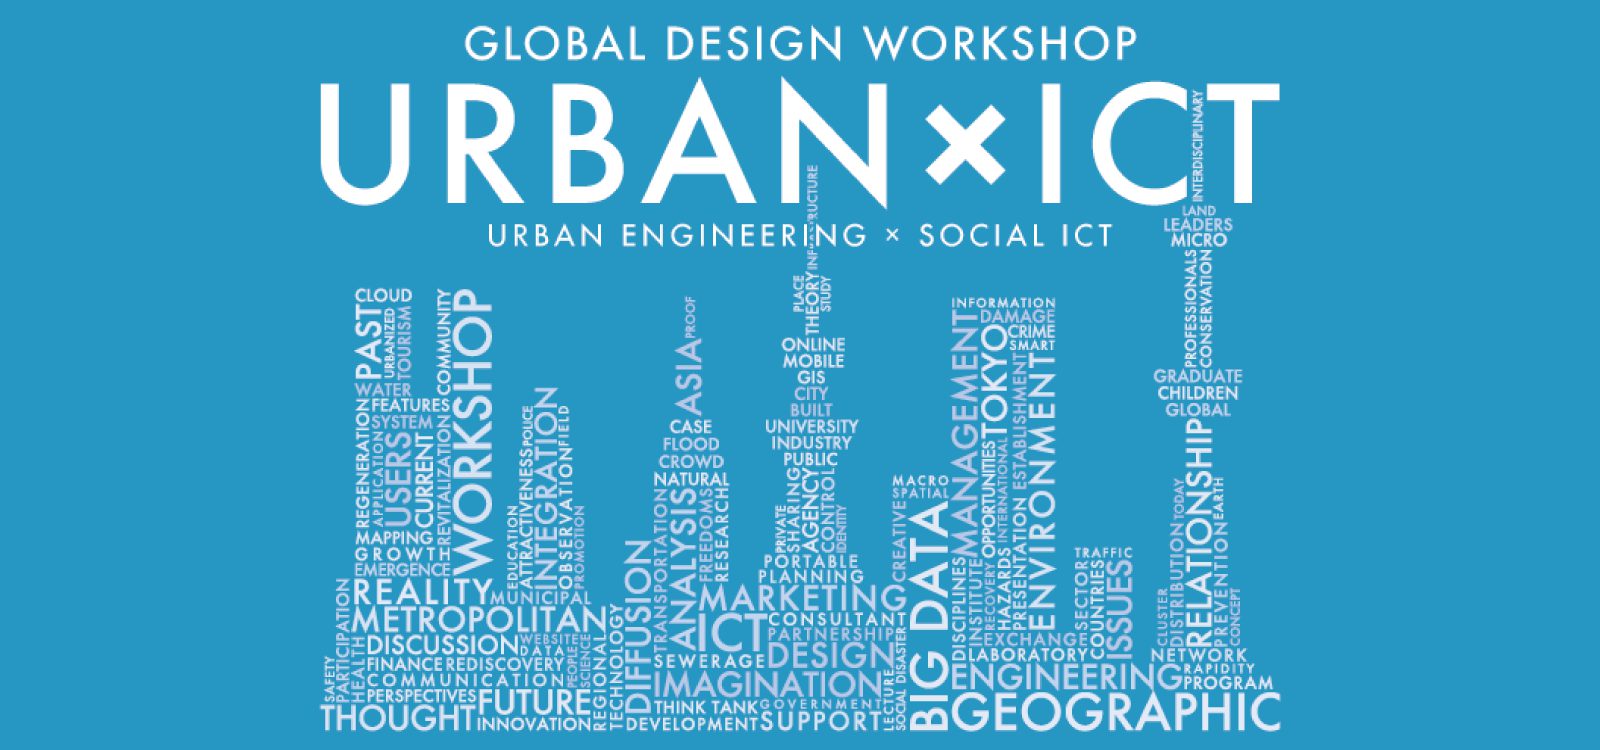 GCL Global Design Workshop “URBAN×ICT”